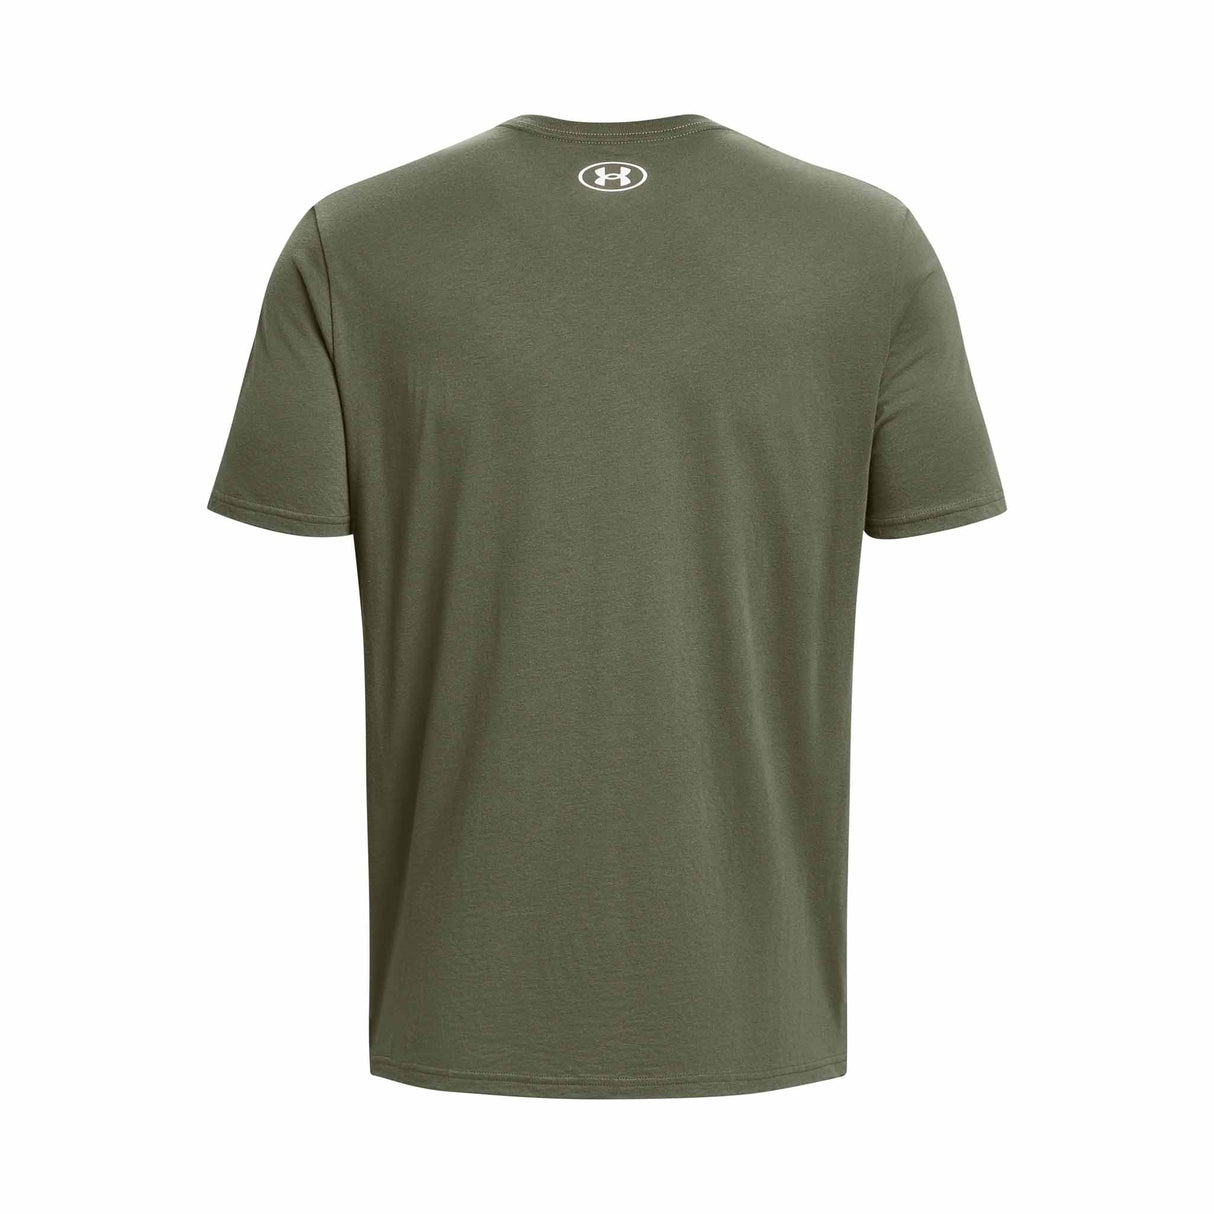 Under Armour Camo t-shirt à manches courtes homme dos - Marine OD Green / Black / White